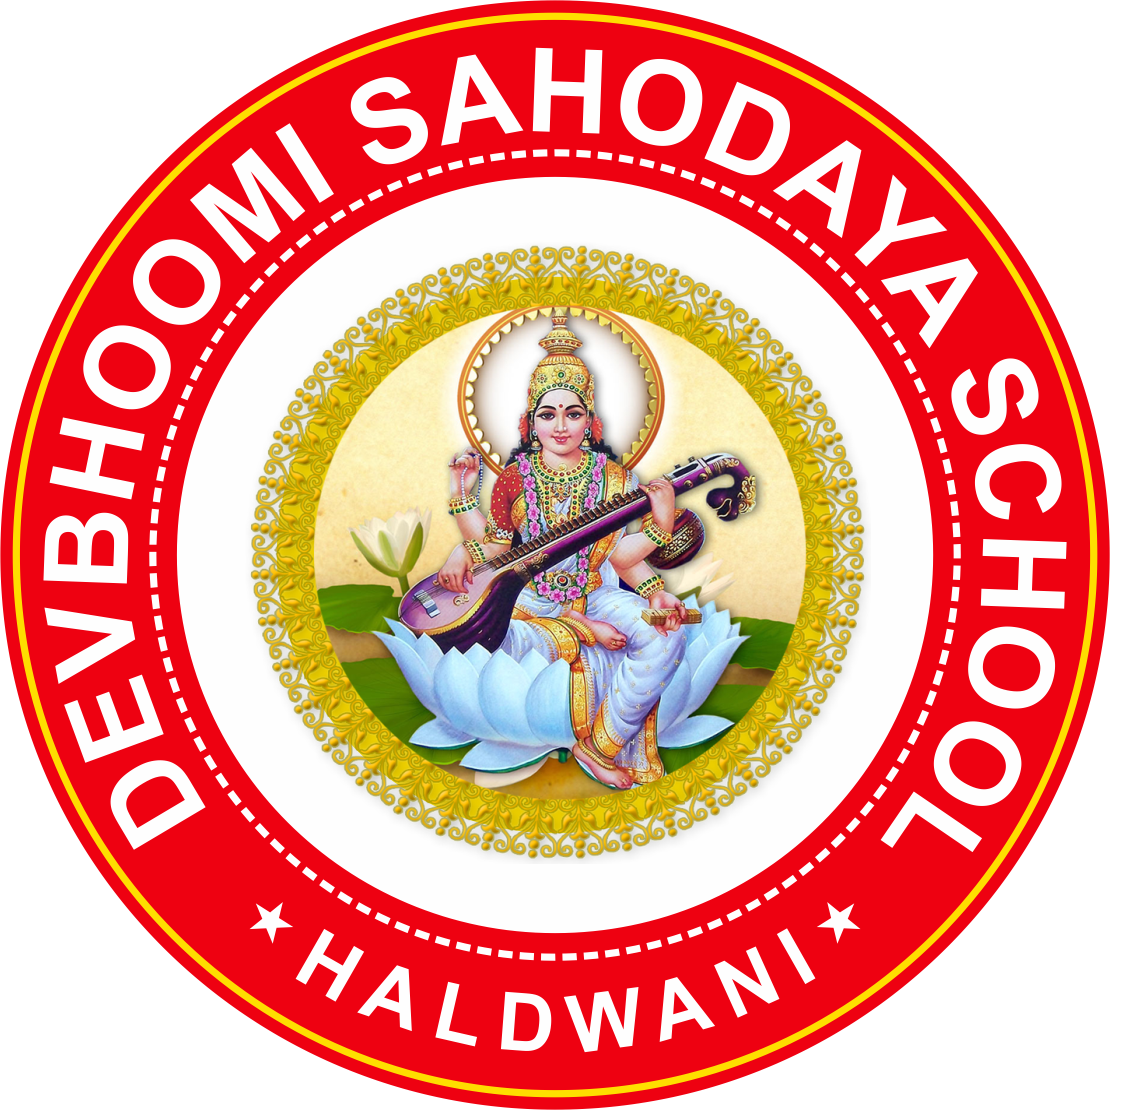 About Devbhoomi Sahodaya School